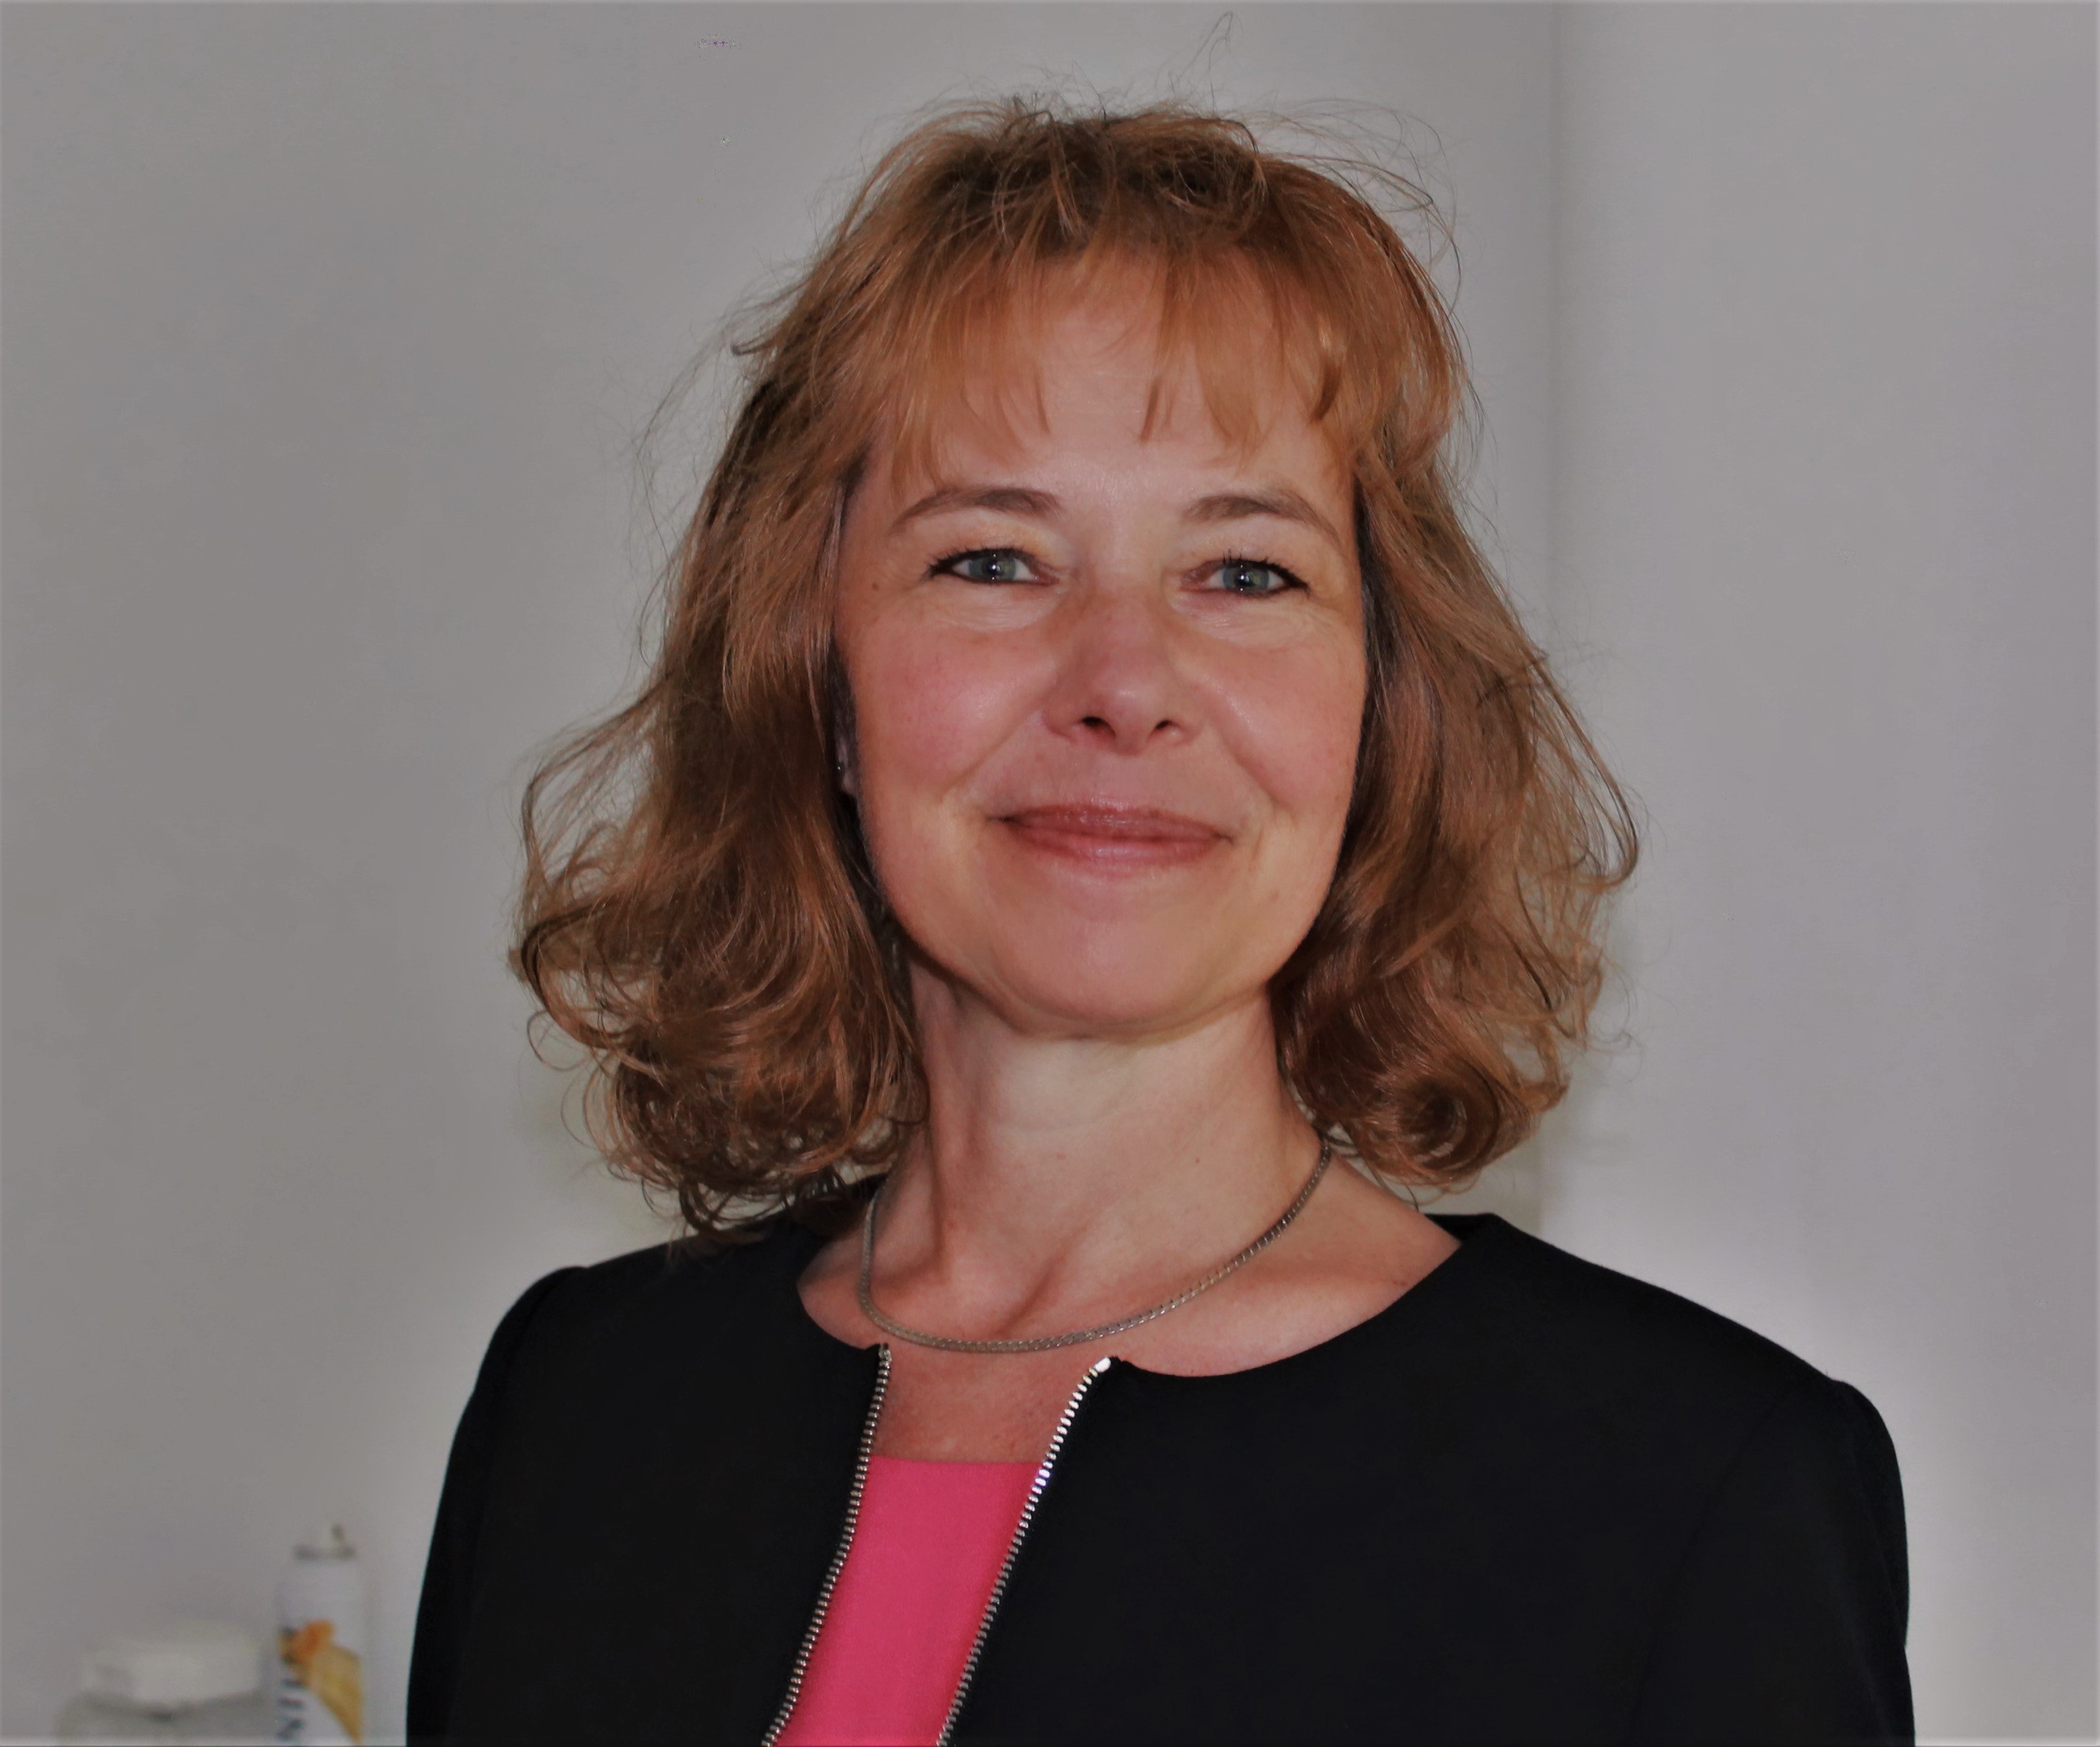 Christina Lampe Onnerud  - CEO Cadenza Innovation